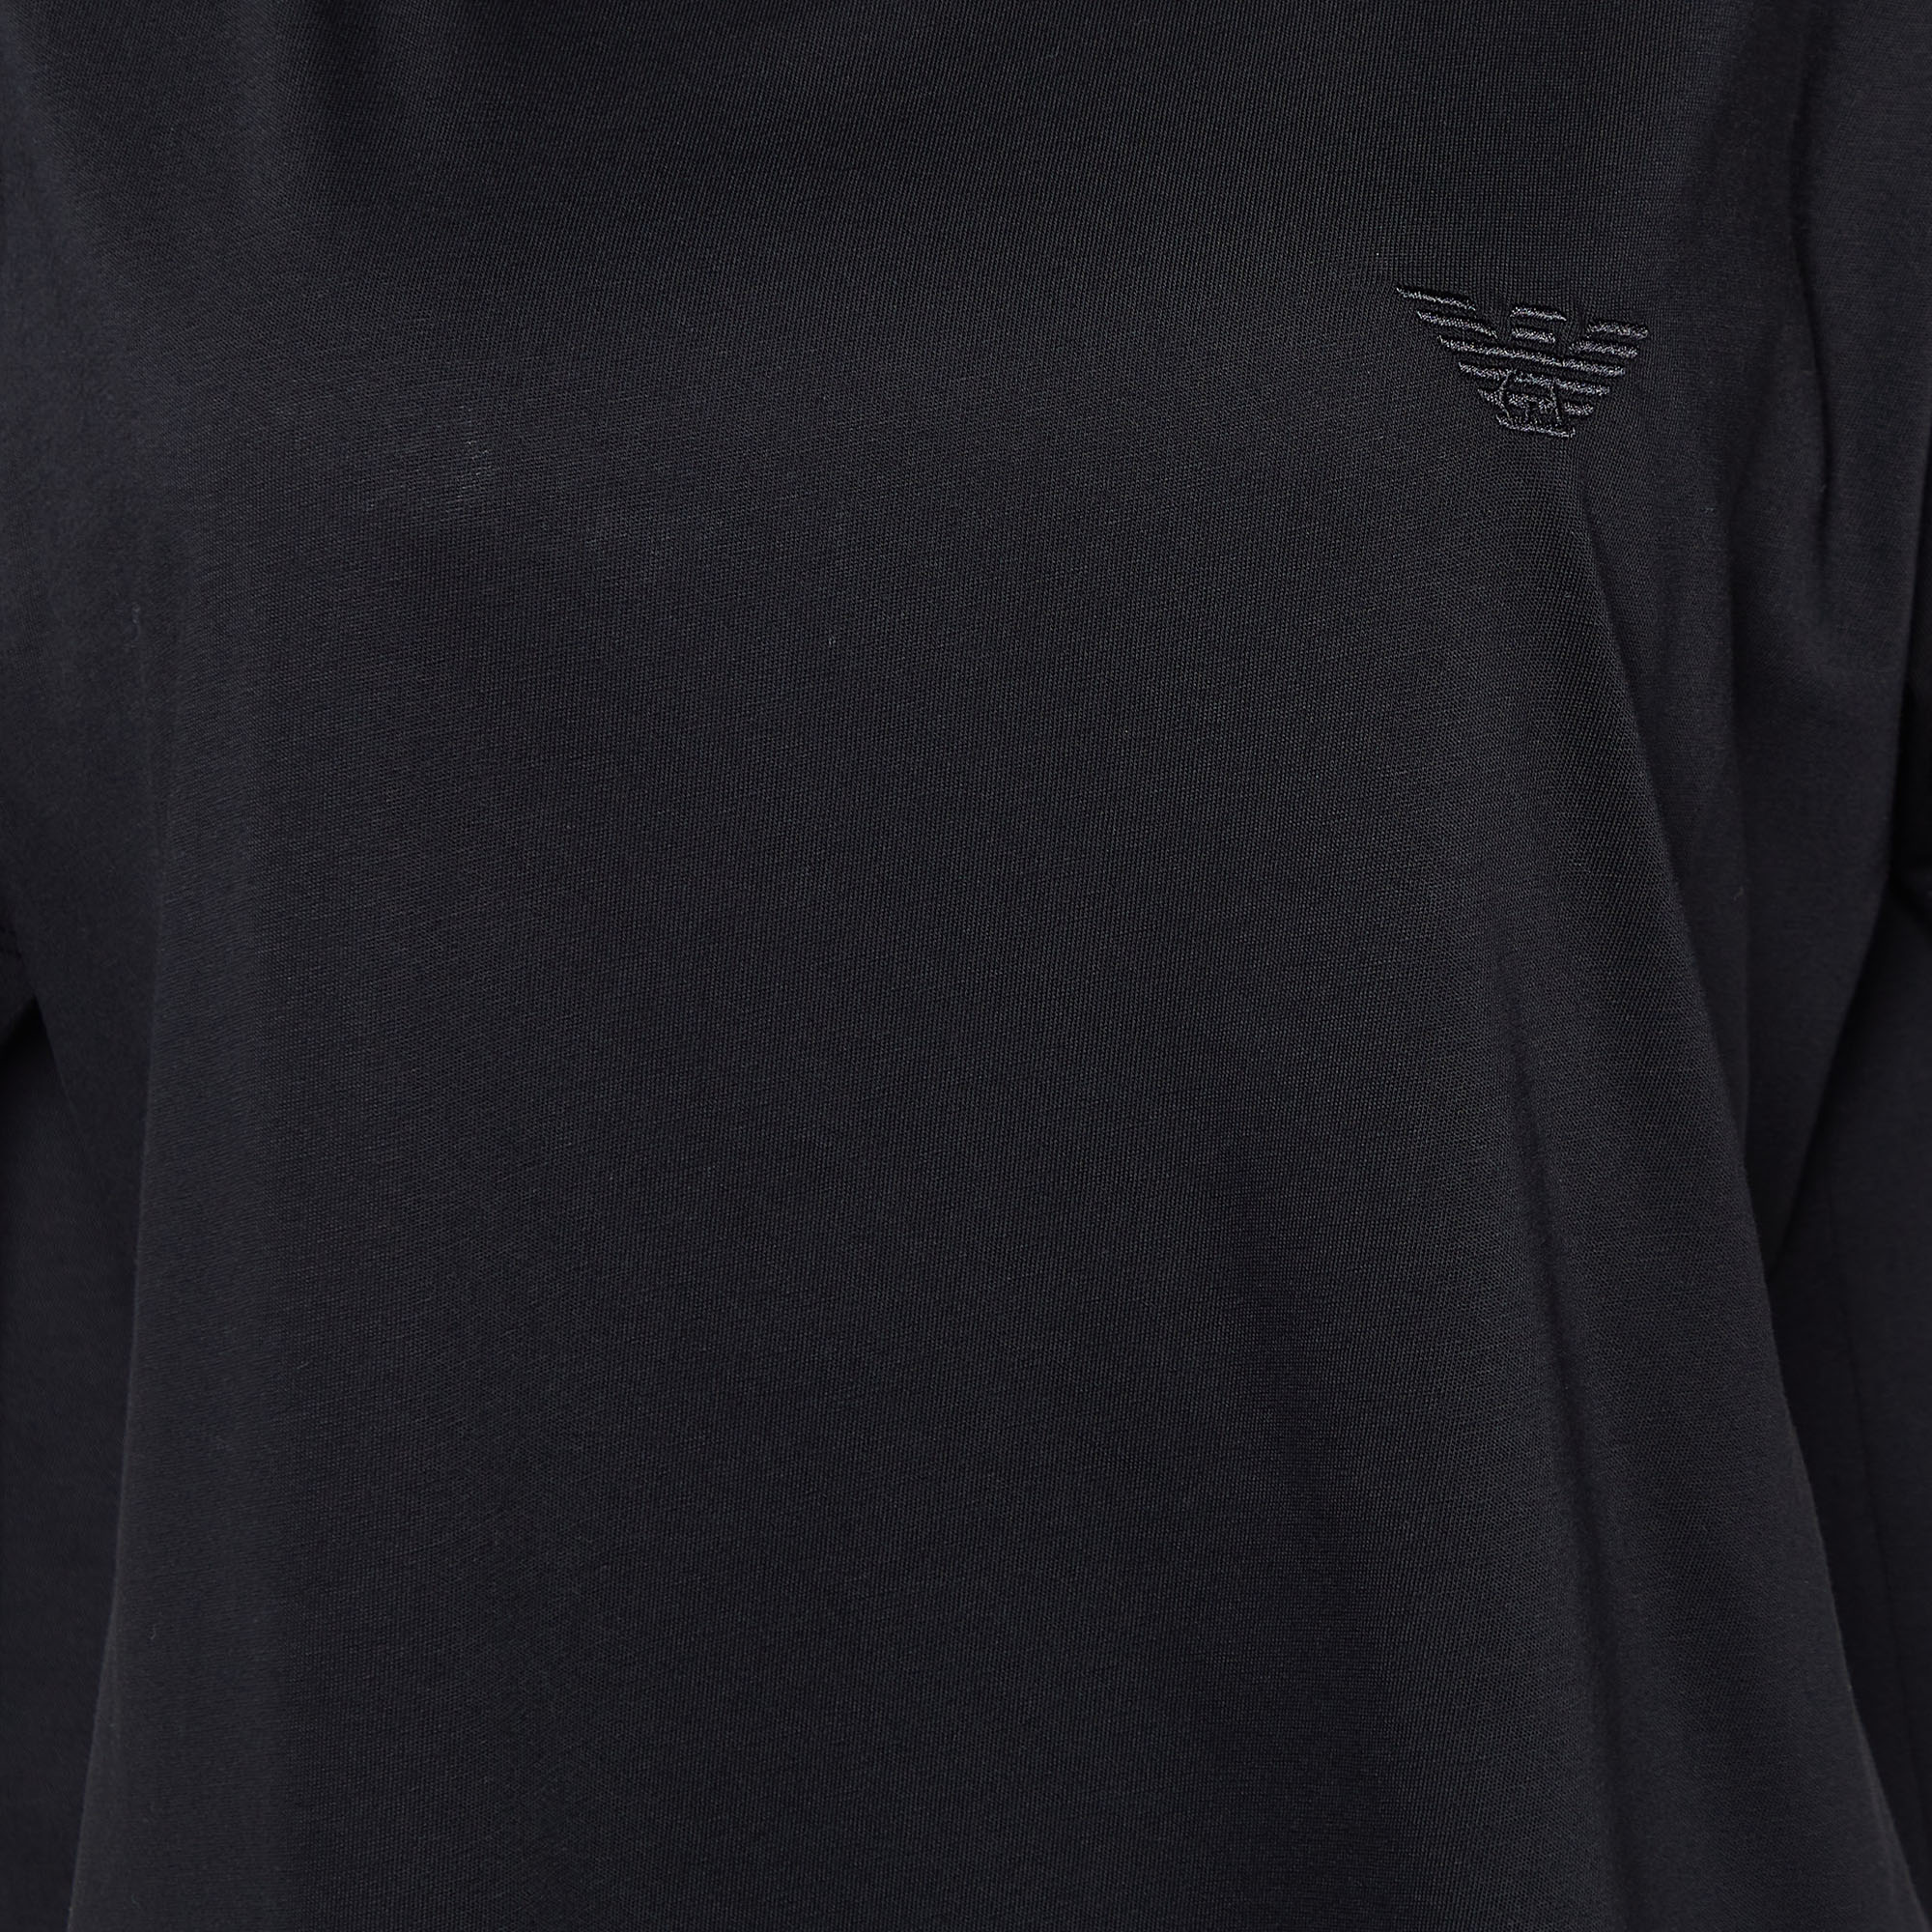 Emporio Armani Black Velour Pattern Cotton Knit T-Shirt L